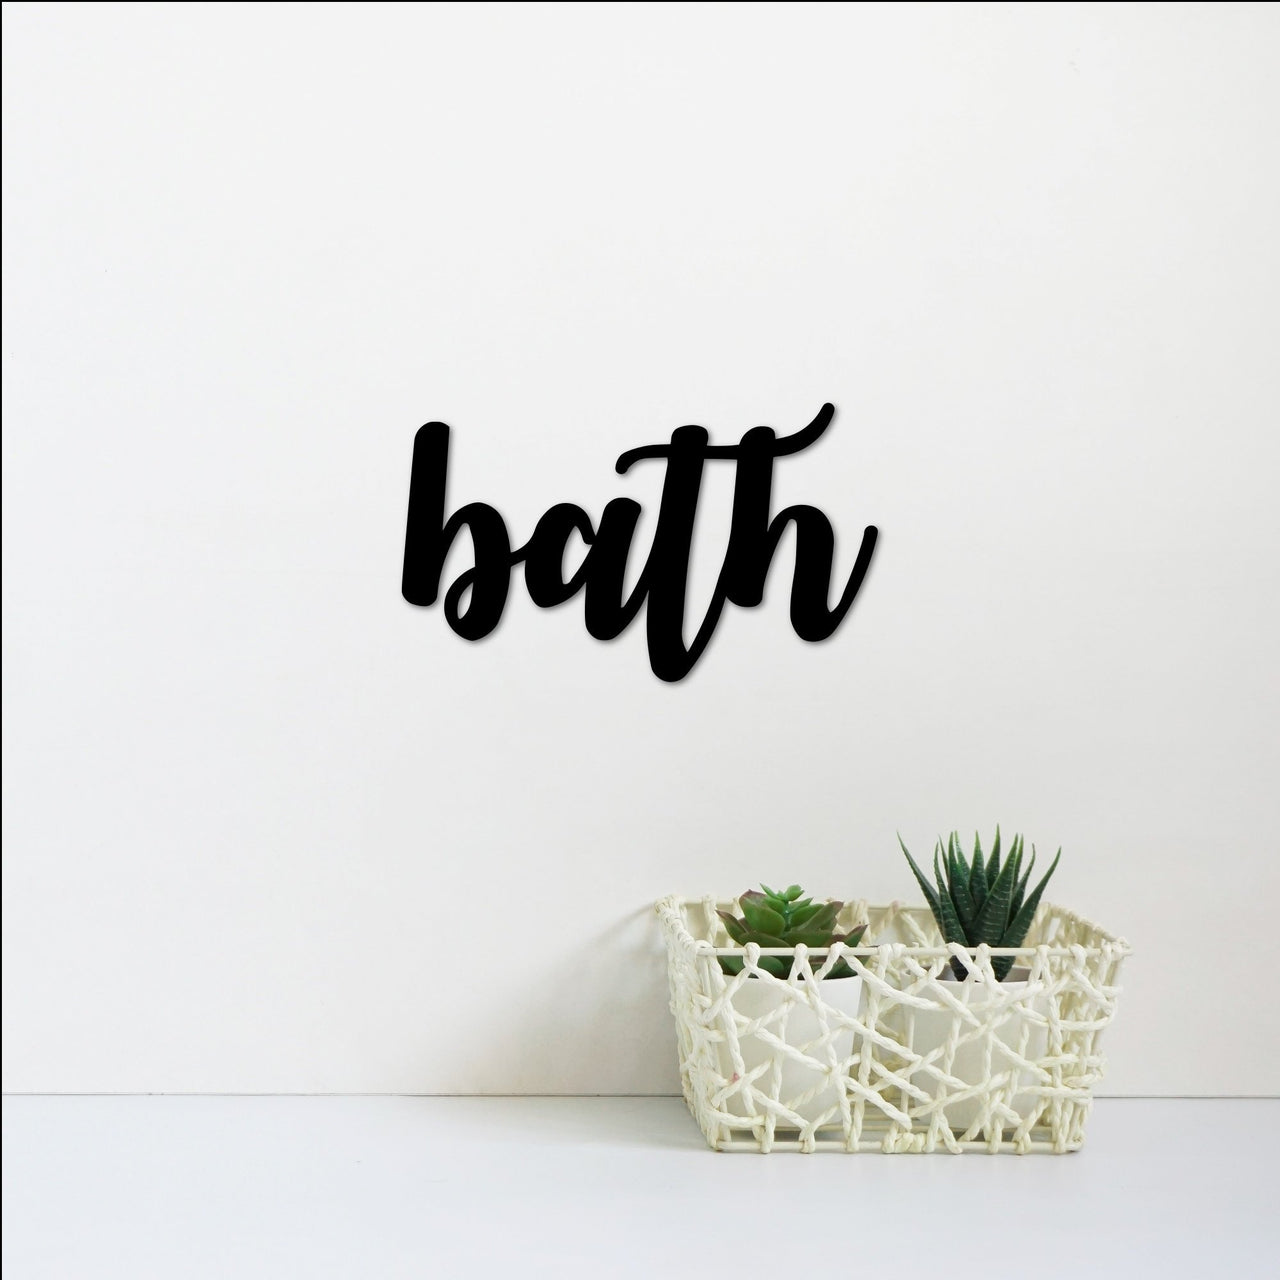 Bath Word Sign | Wall Decor Metal Art | Bath Gifts | Bathroom Decor for the Wall | Metal Word Art | Master Bedroom Bathroom Accessories